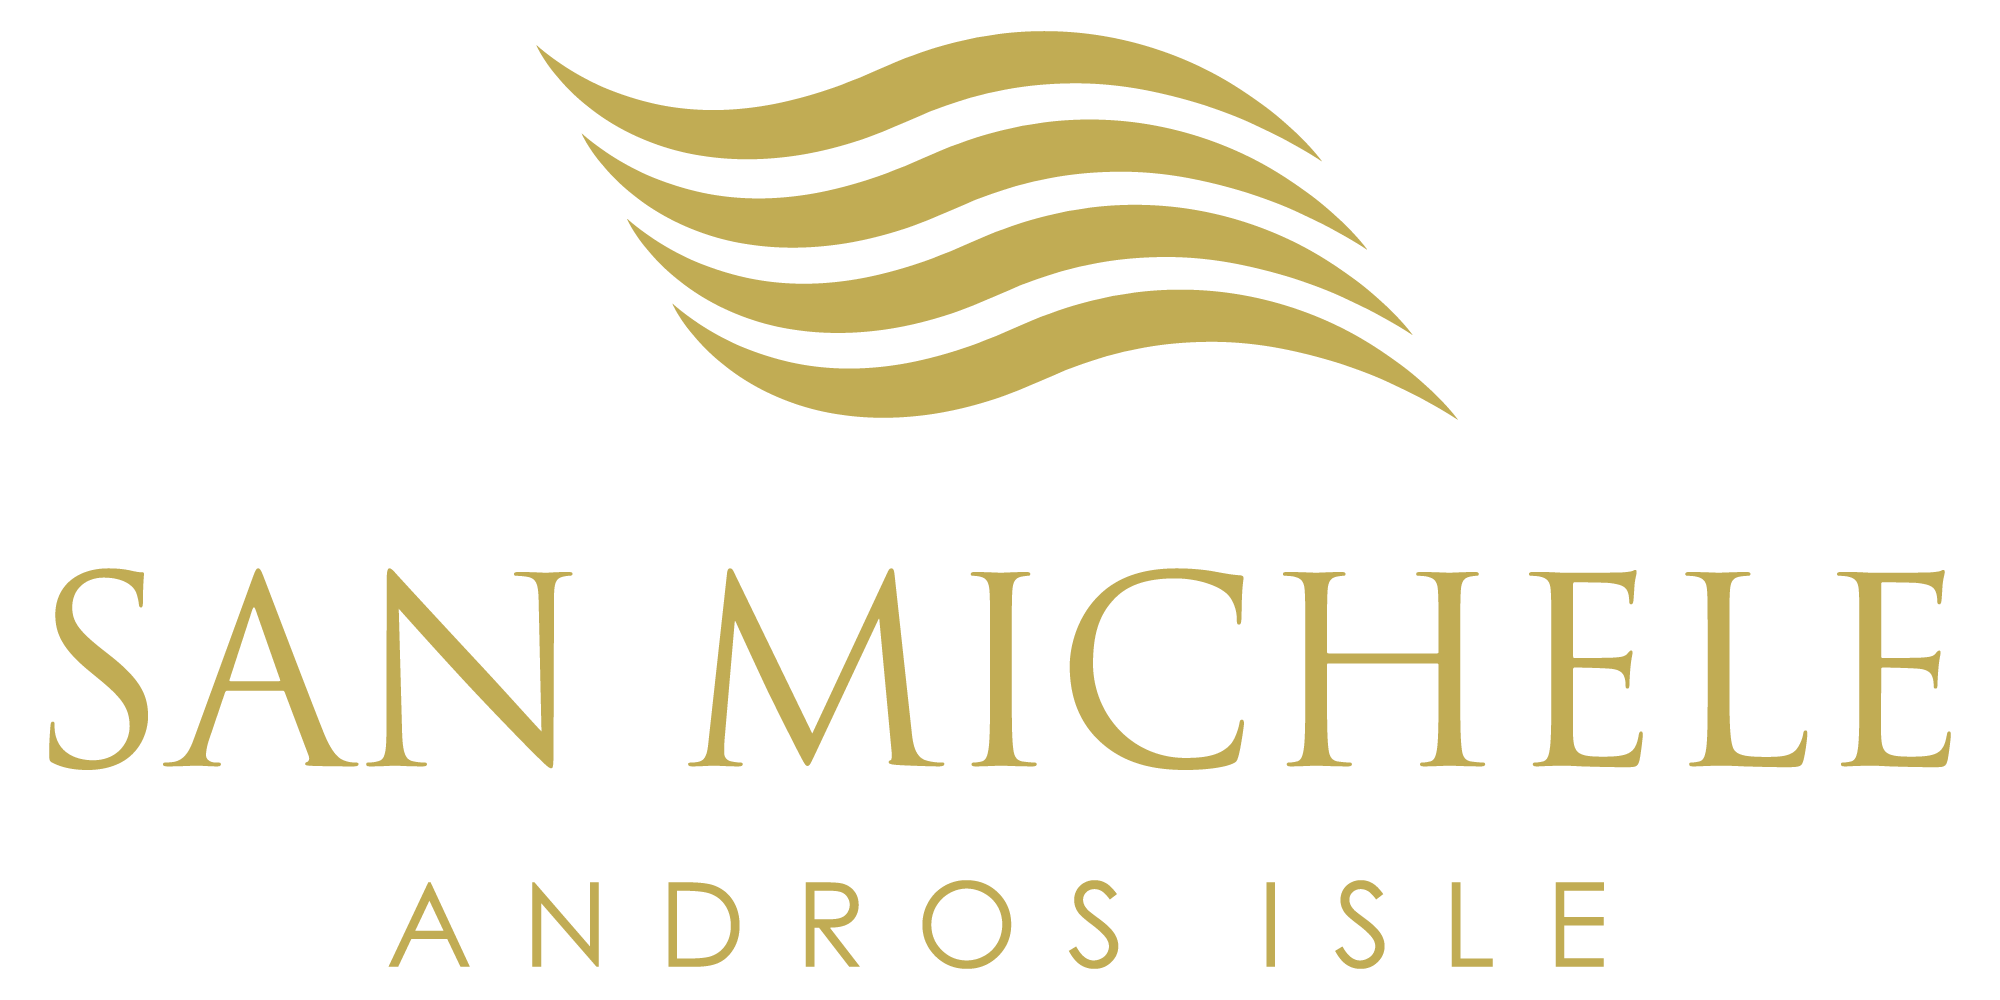 San Michele Andros Isle